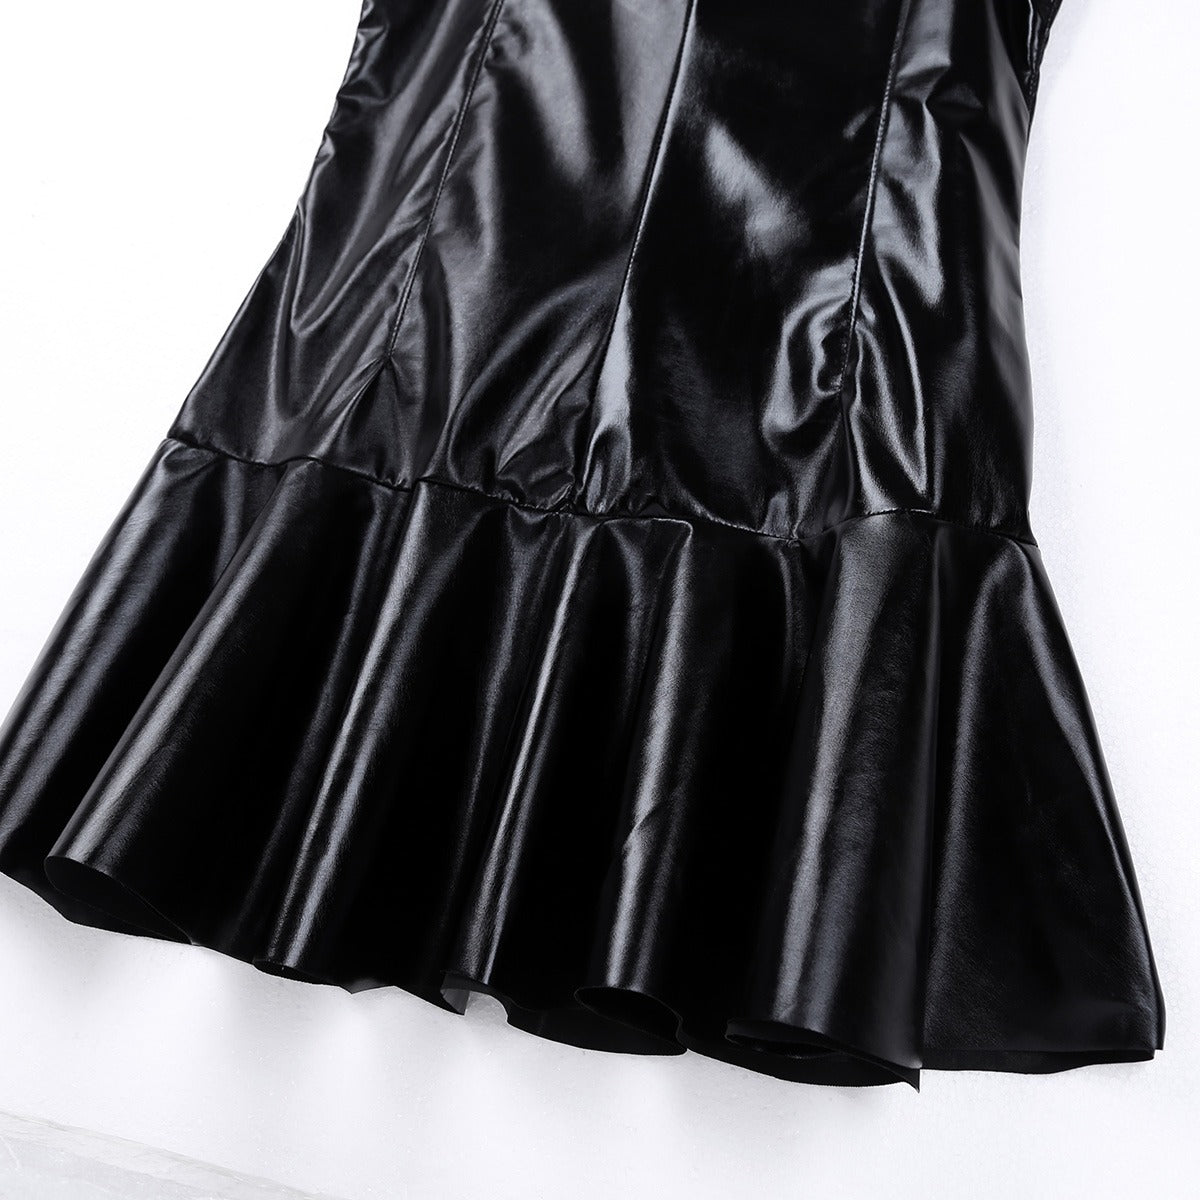 Womens Cocktail Dresses  in Black / Wetlook Babydoll PU Leather High Collar Bottom Flare Mini Dress - HARD'N'HEAVY